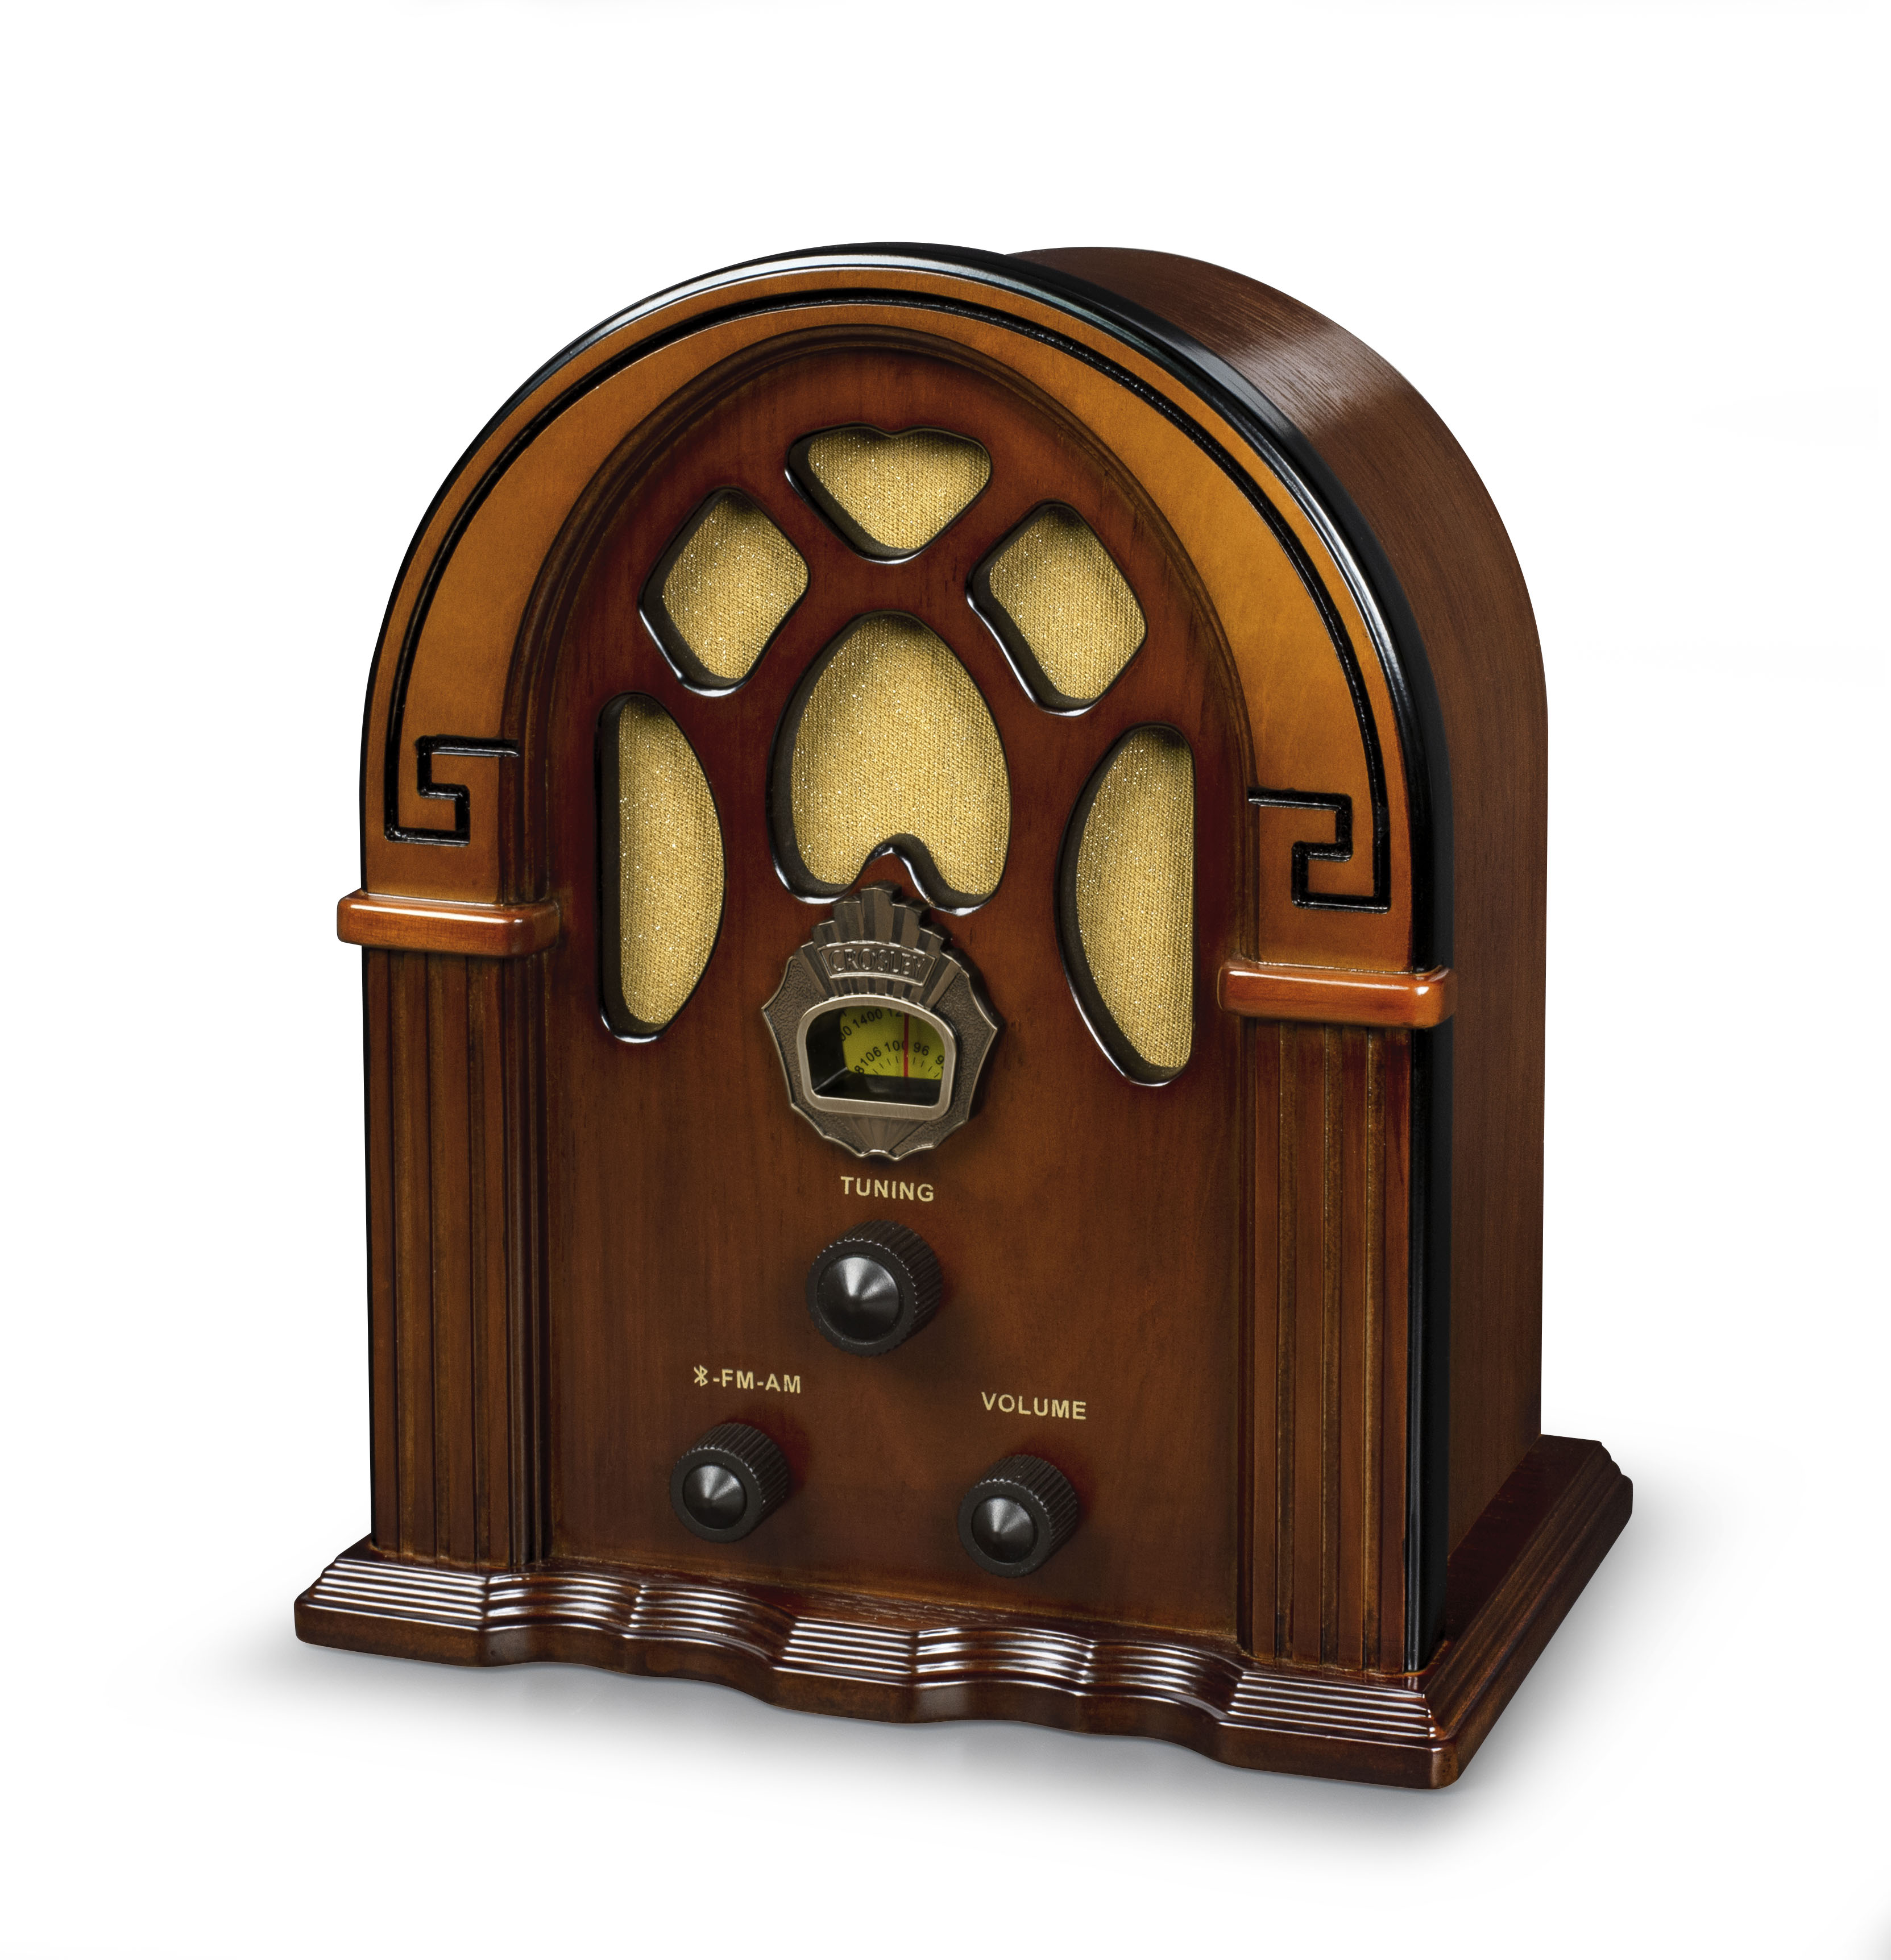 Crosley Portable AM/FM Radio, Walnut, CR31D-WA - image 1 of 8